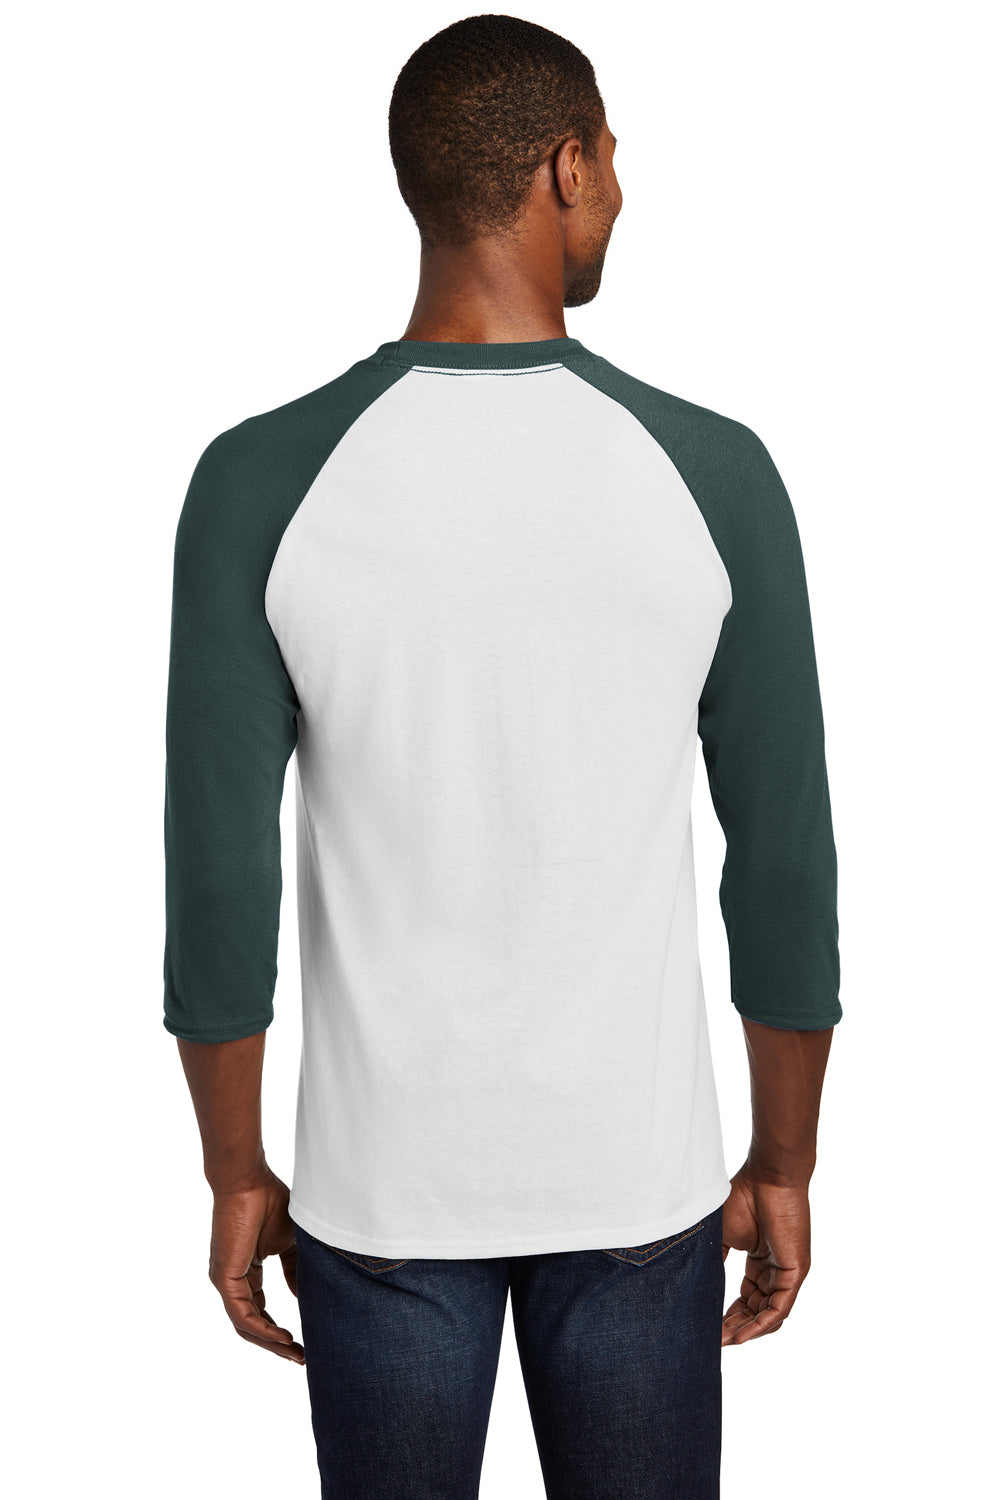 Port & Company PC55RS Mens Core Moisture Wicking 3/4 Sleeve Crewneck T-Shirt White/Dark Green Back